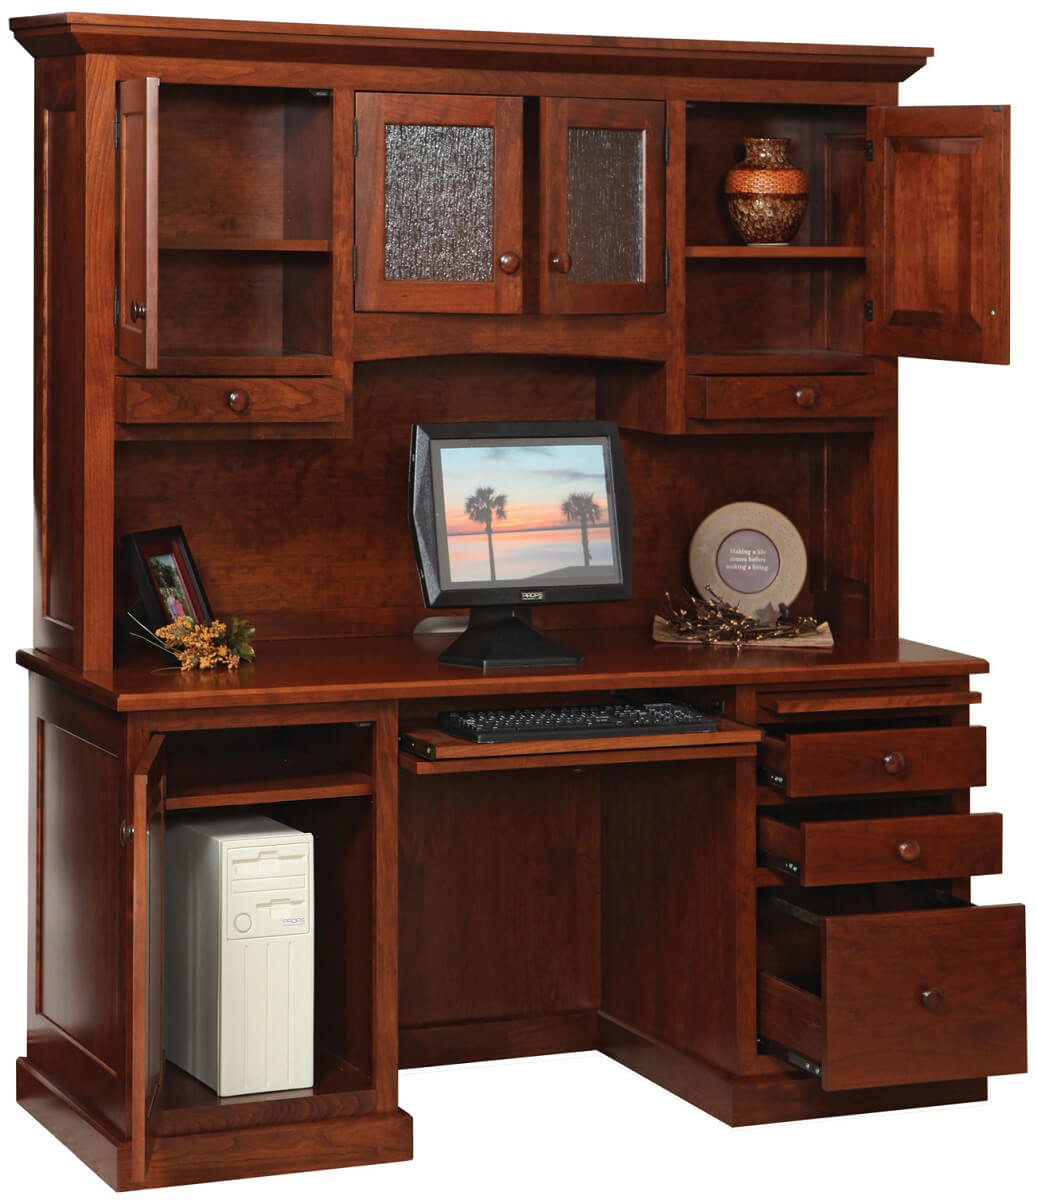 Handmade Wooden Computer Desk
